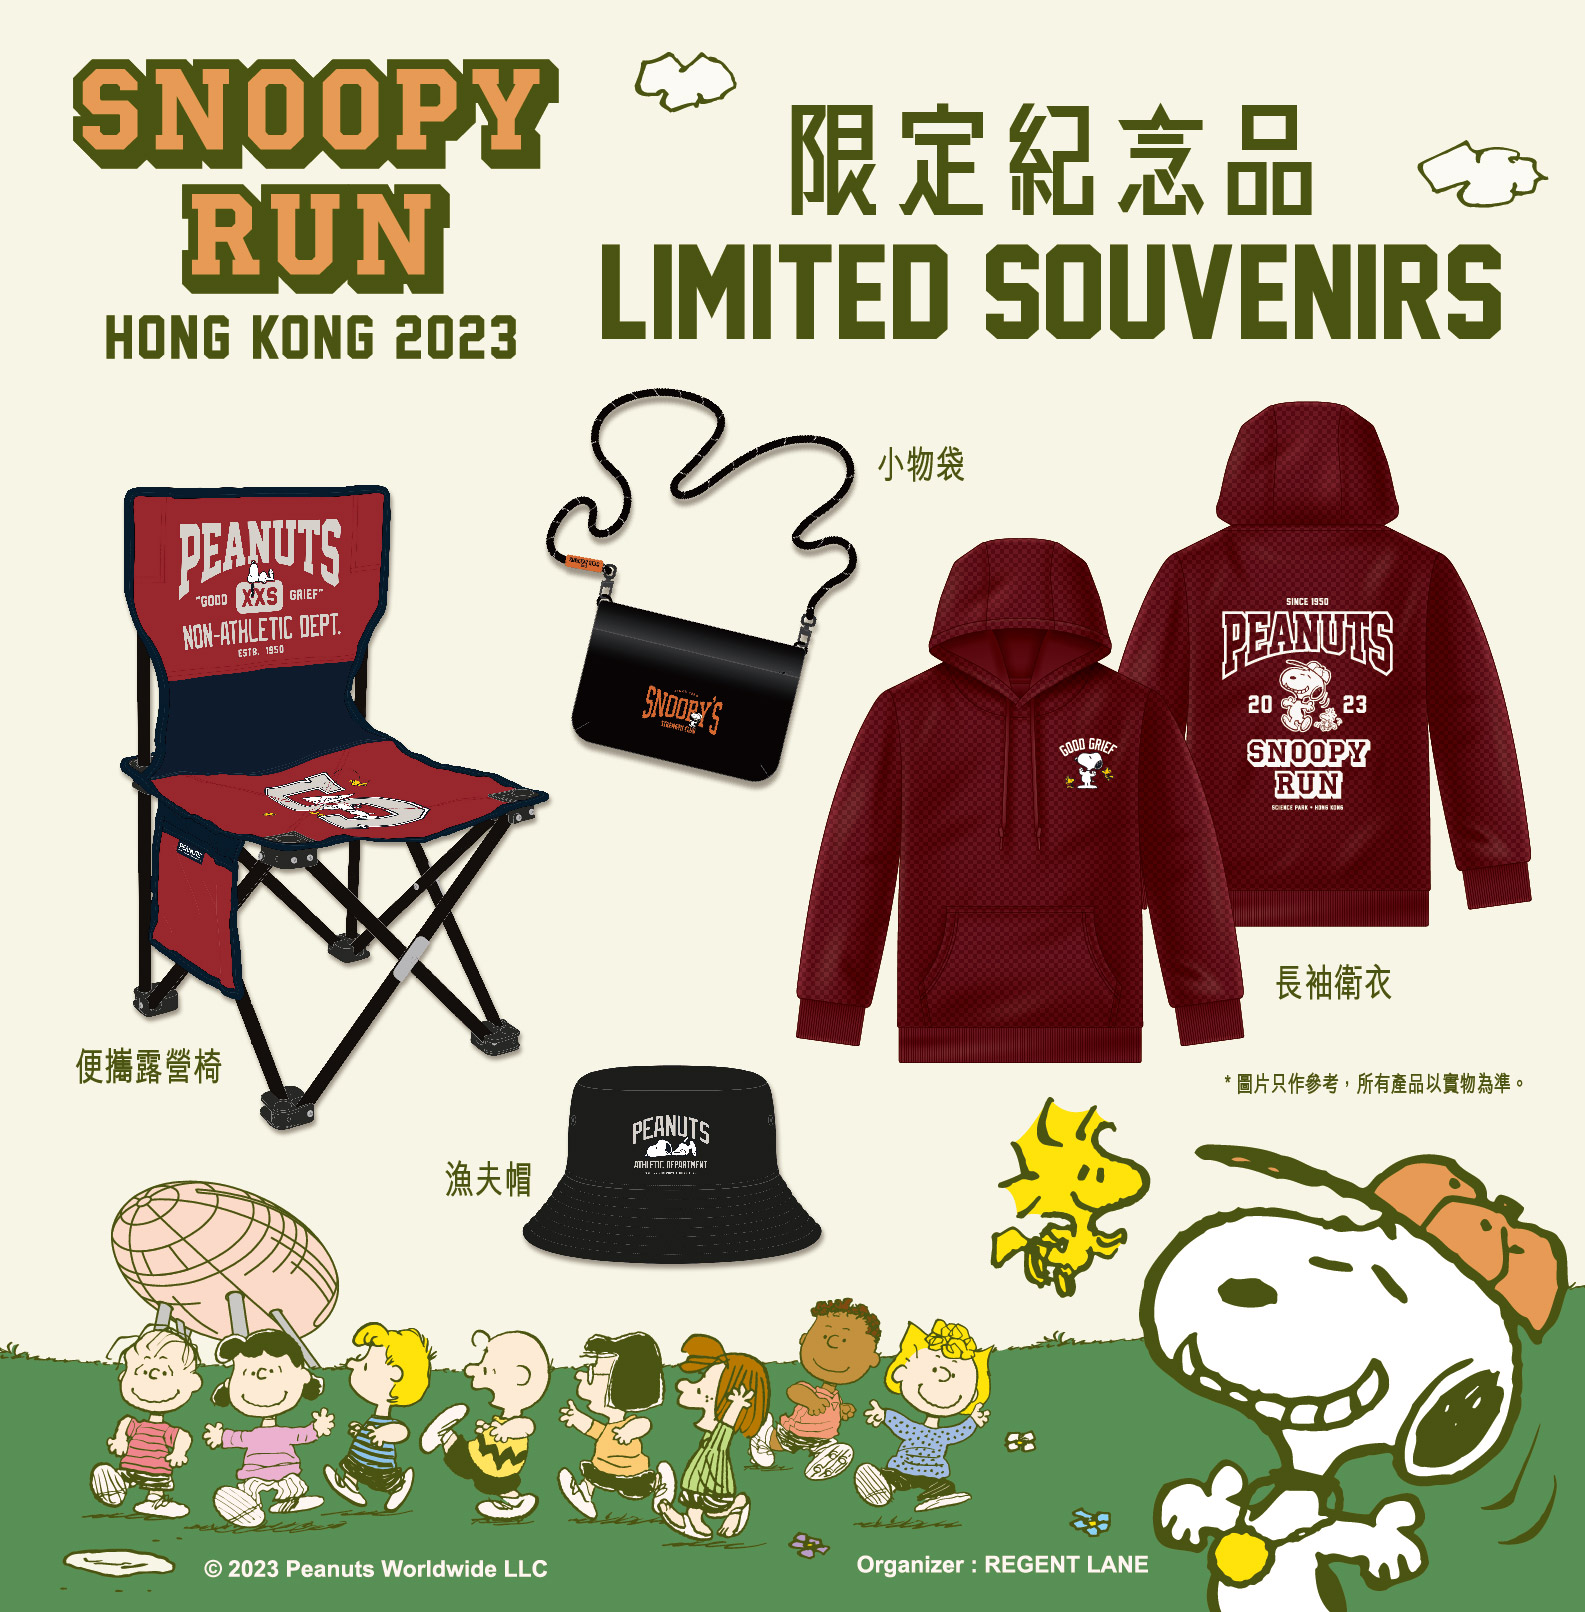 Snoopy Run Hong Kong 2023